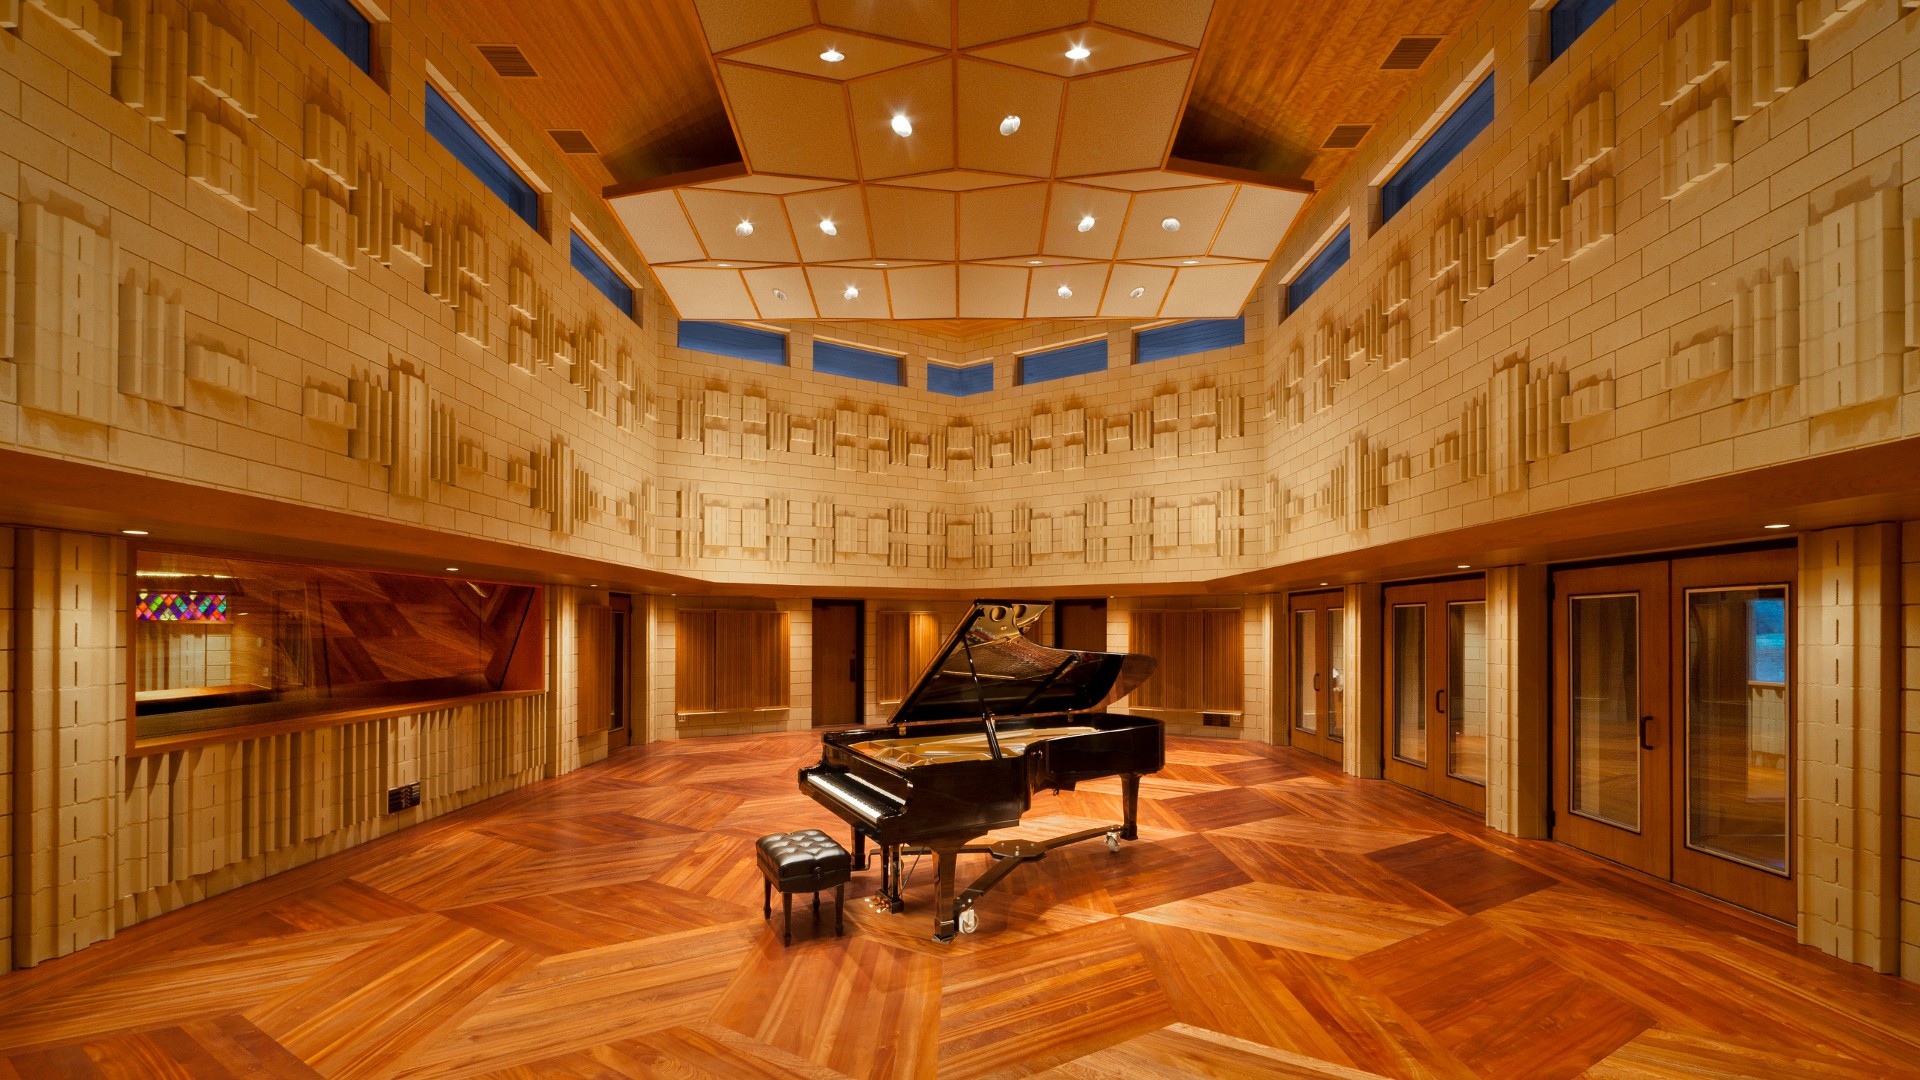 General 1920x1080 piano studio wooden surface interior musical instrument indoors